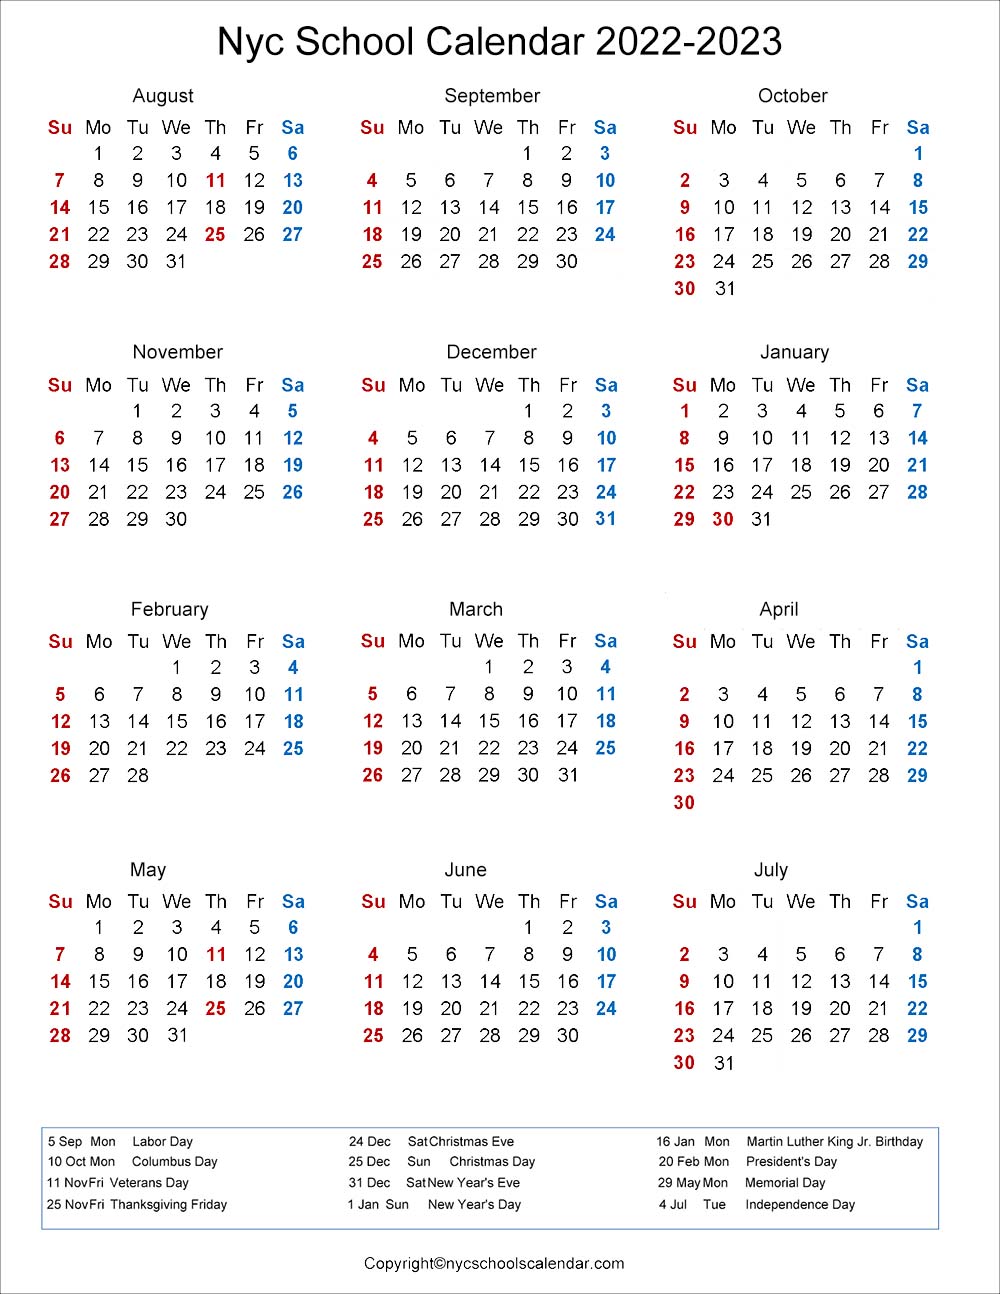 Norwich University Calendar 2022 2023 ❤️Nyc School Holidays Calendar 2022-2023 ✓